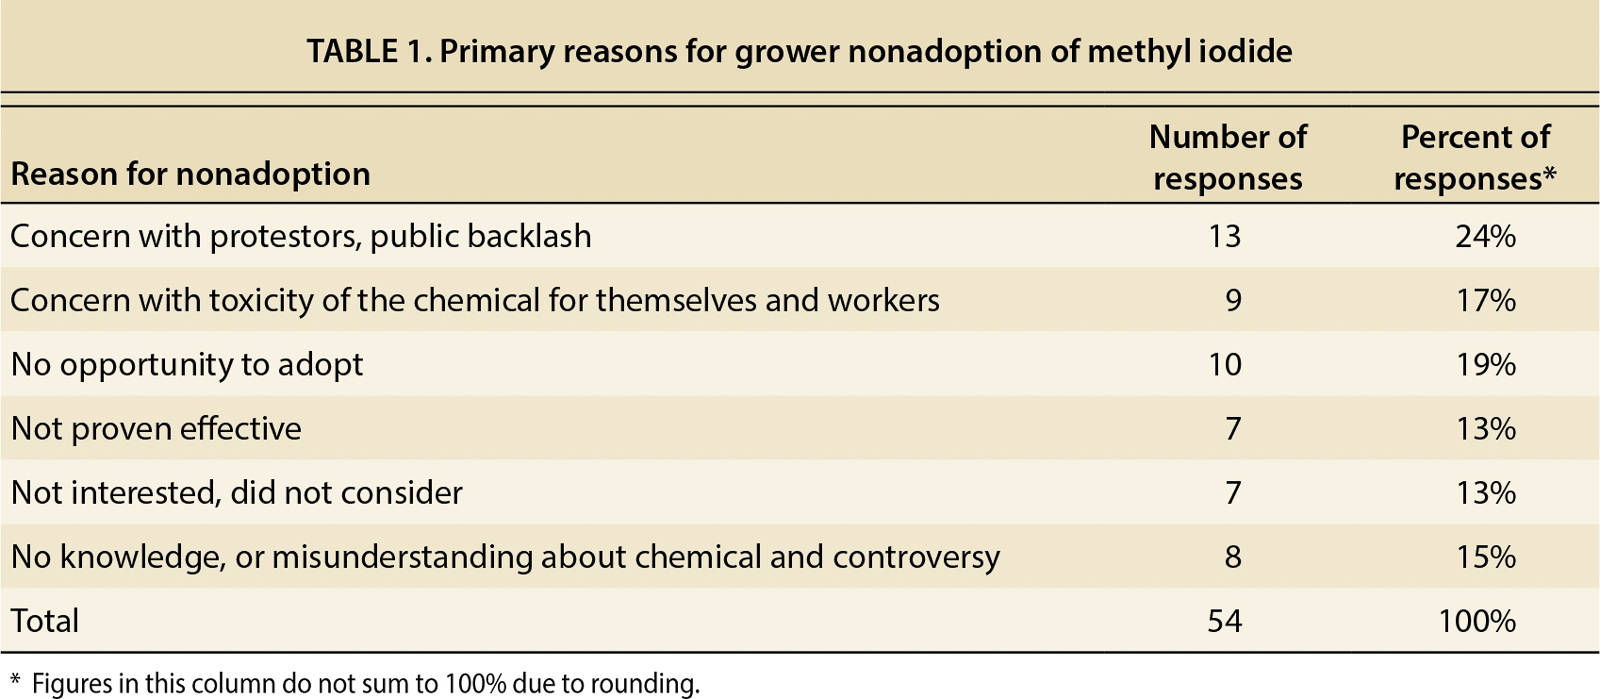 Primary reasons for grower nonadoption of methyl iodide